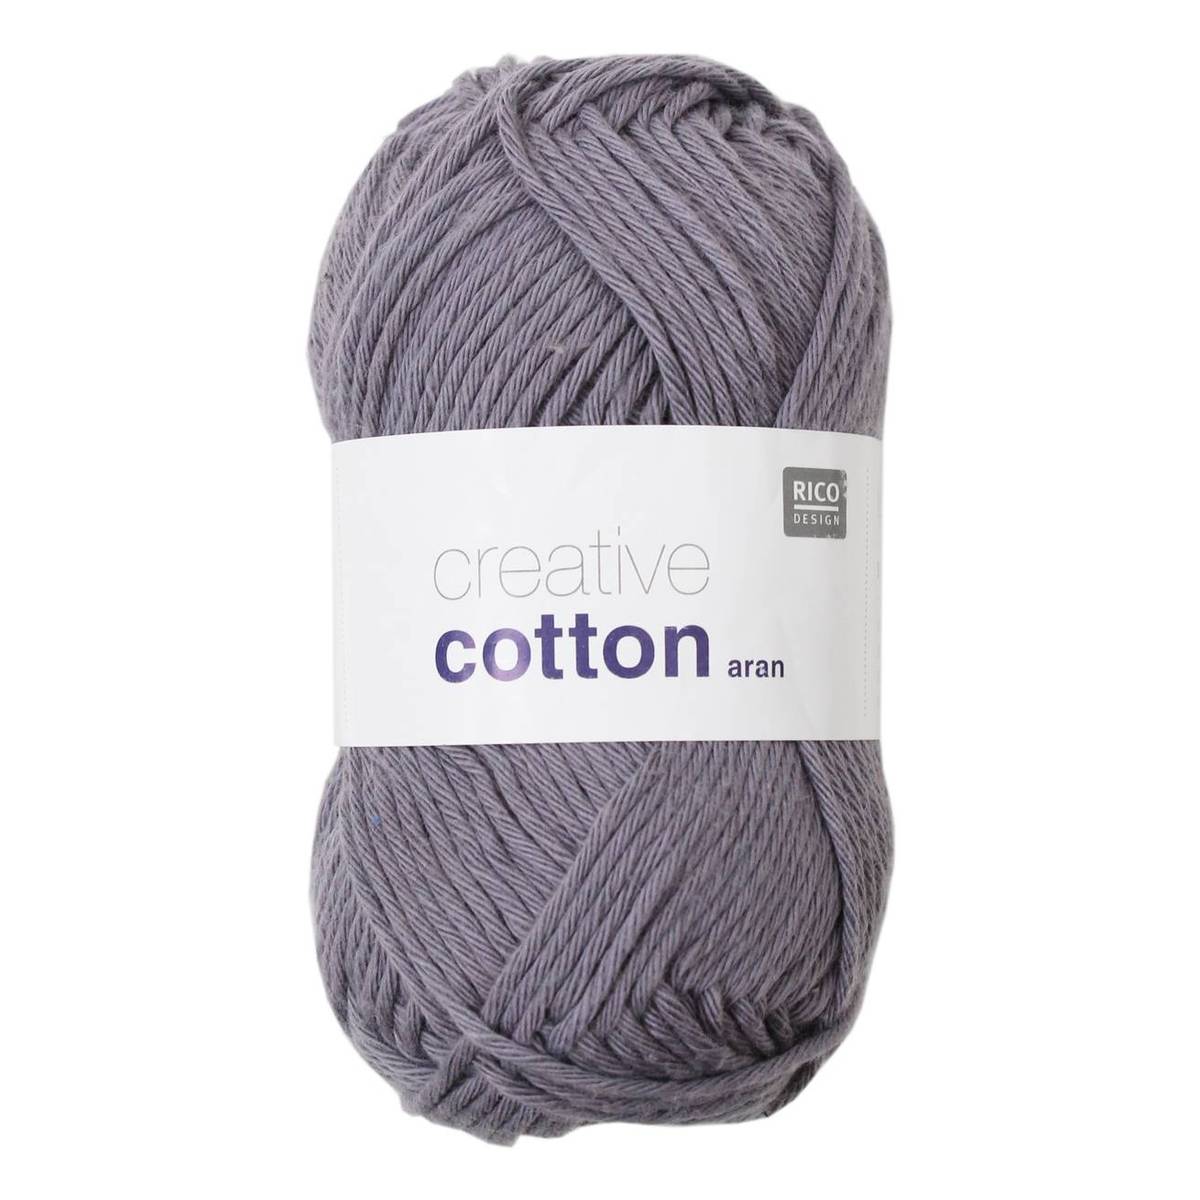 Rico Mouse Grey Creative Cotton Aran Yarn 50 g | Hobbycraft